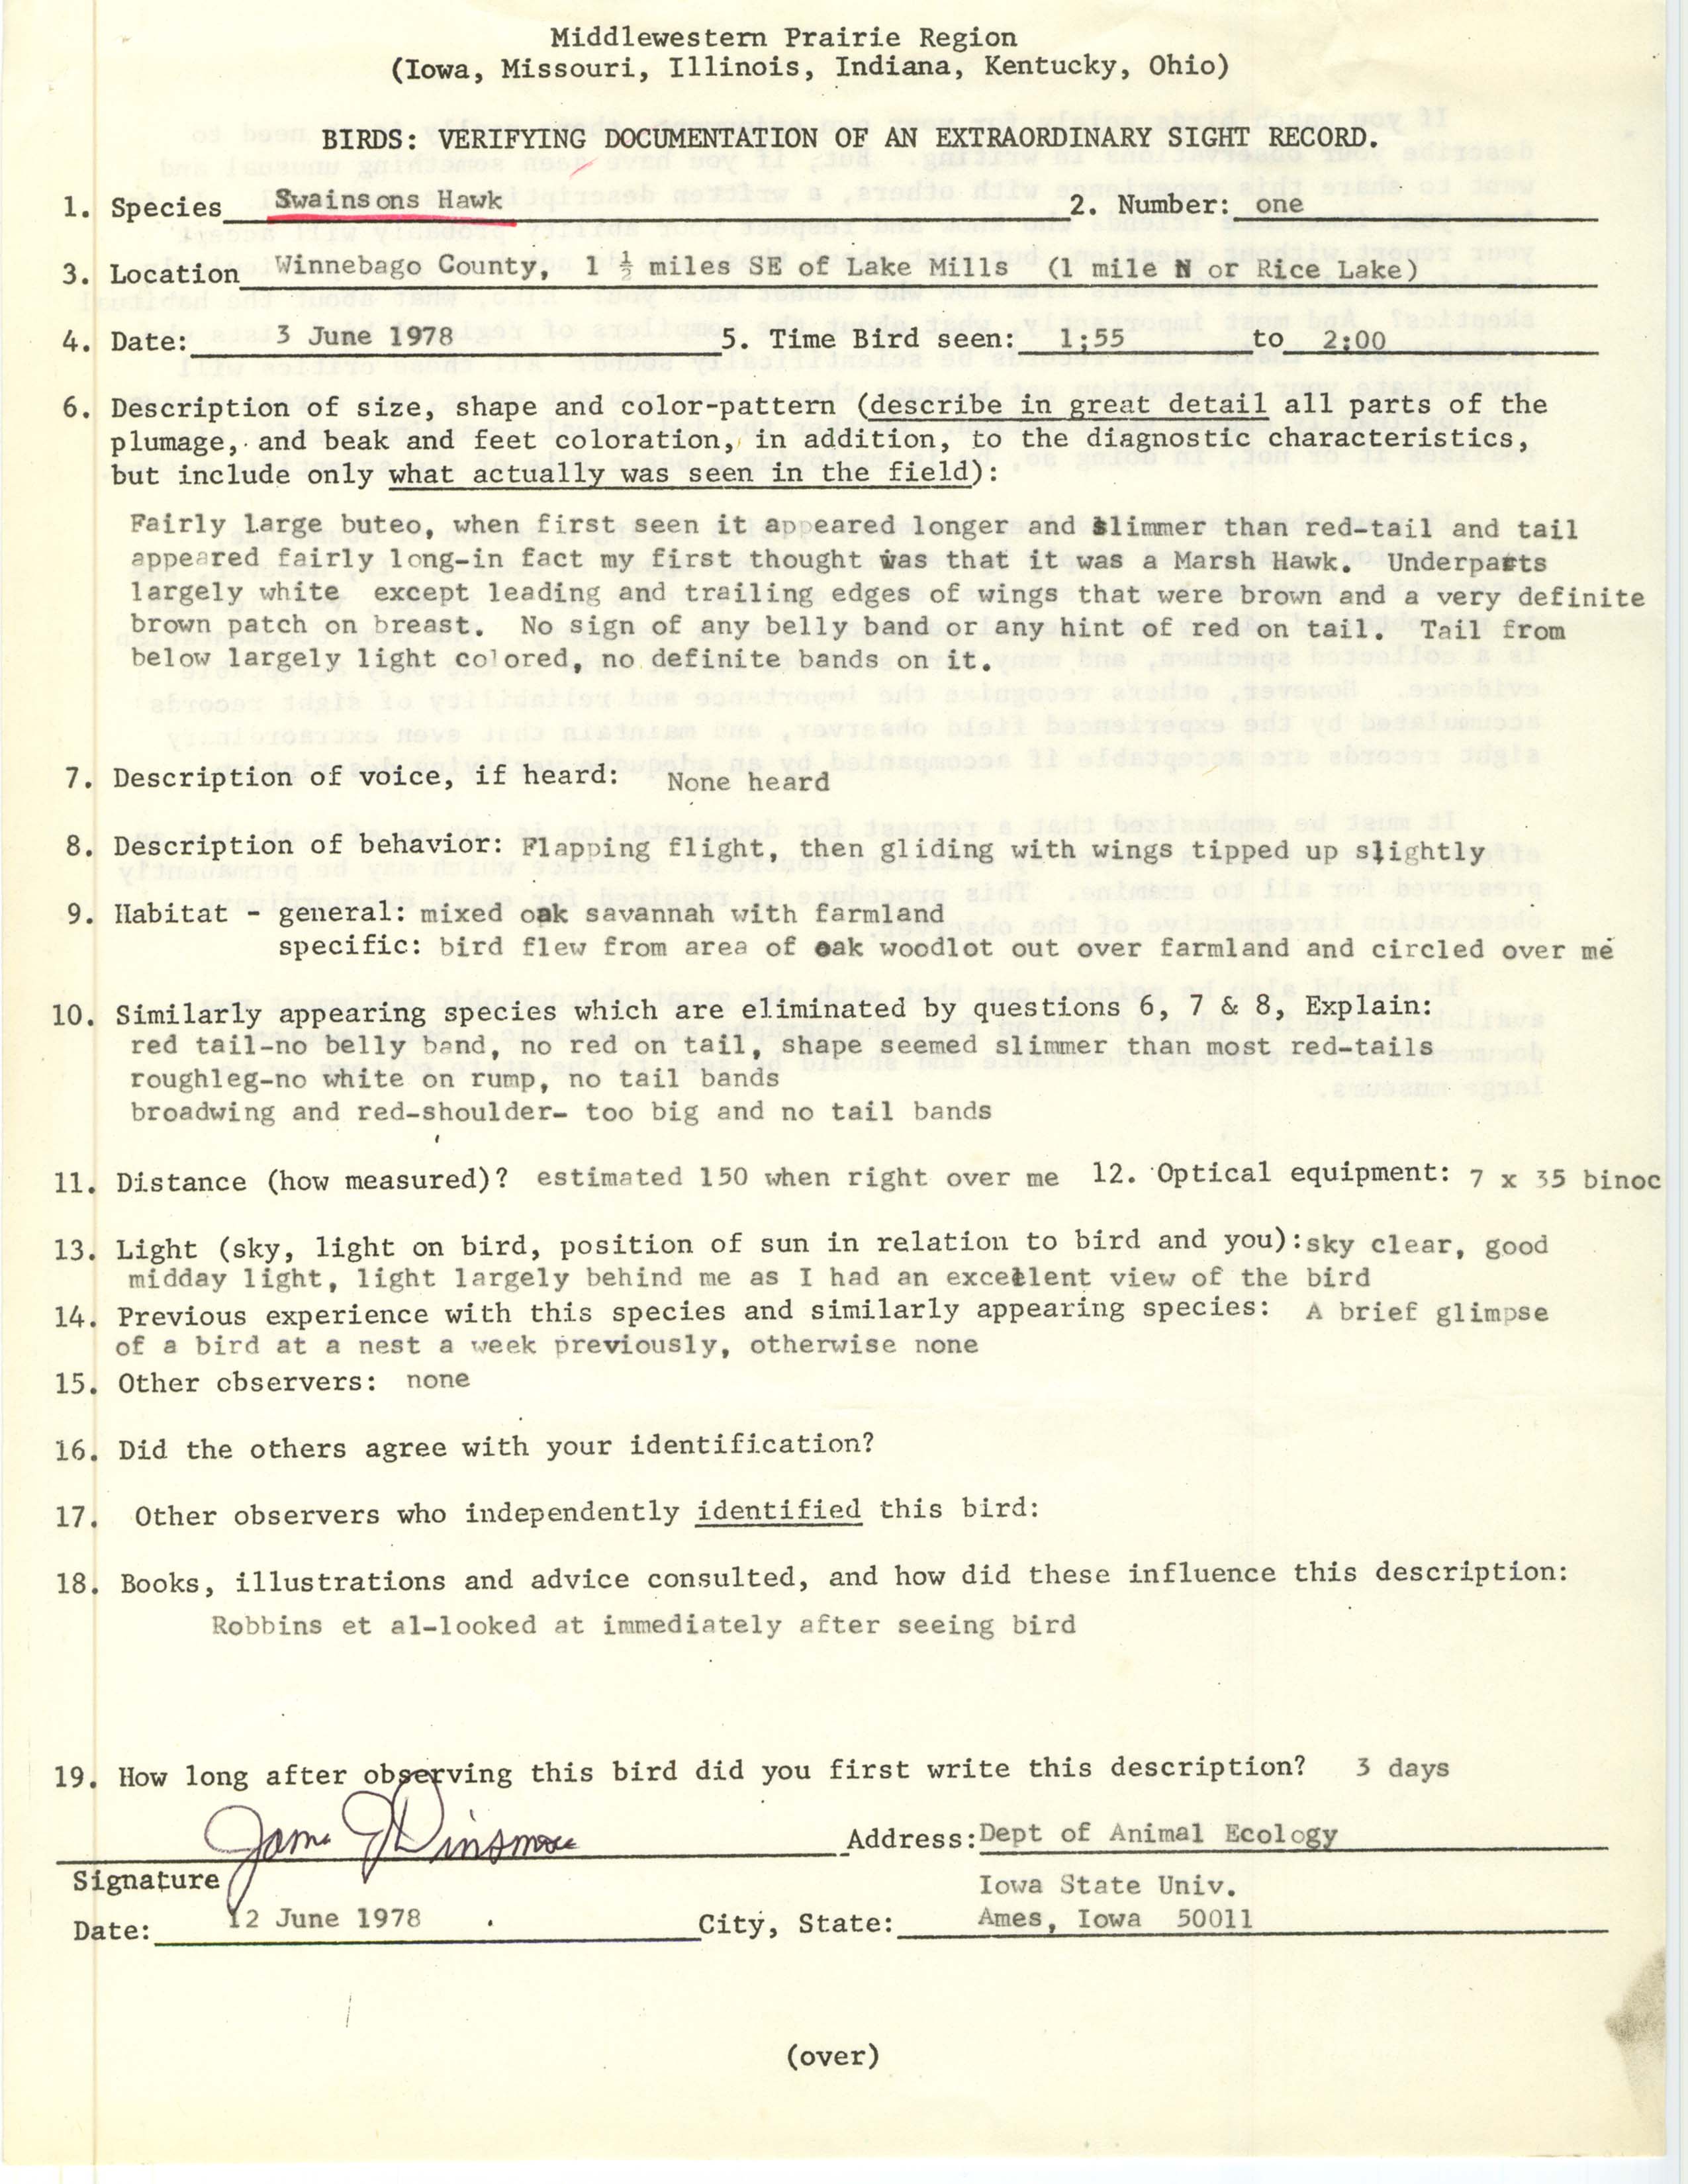 Rare bird documentation form for Swainson's Hawk near Lake Mills and Rice Lake, 1978